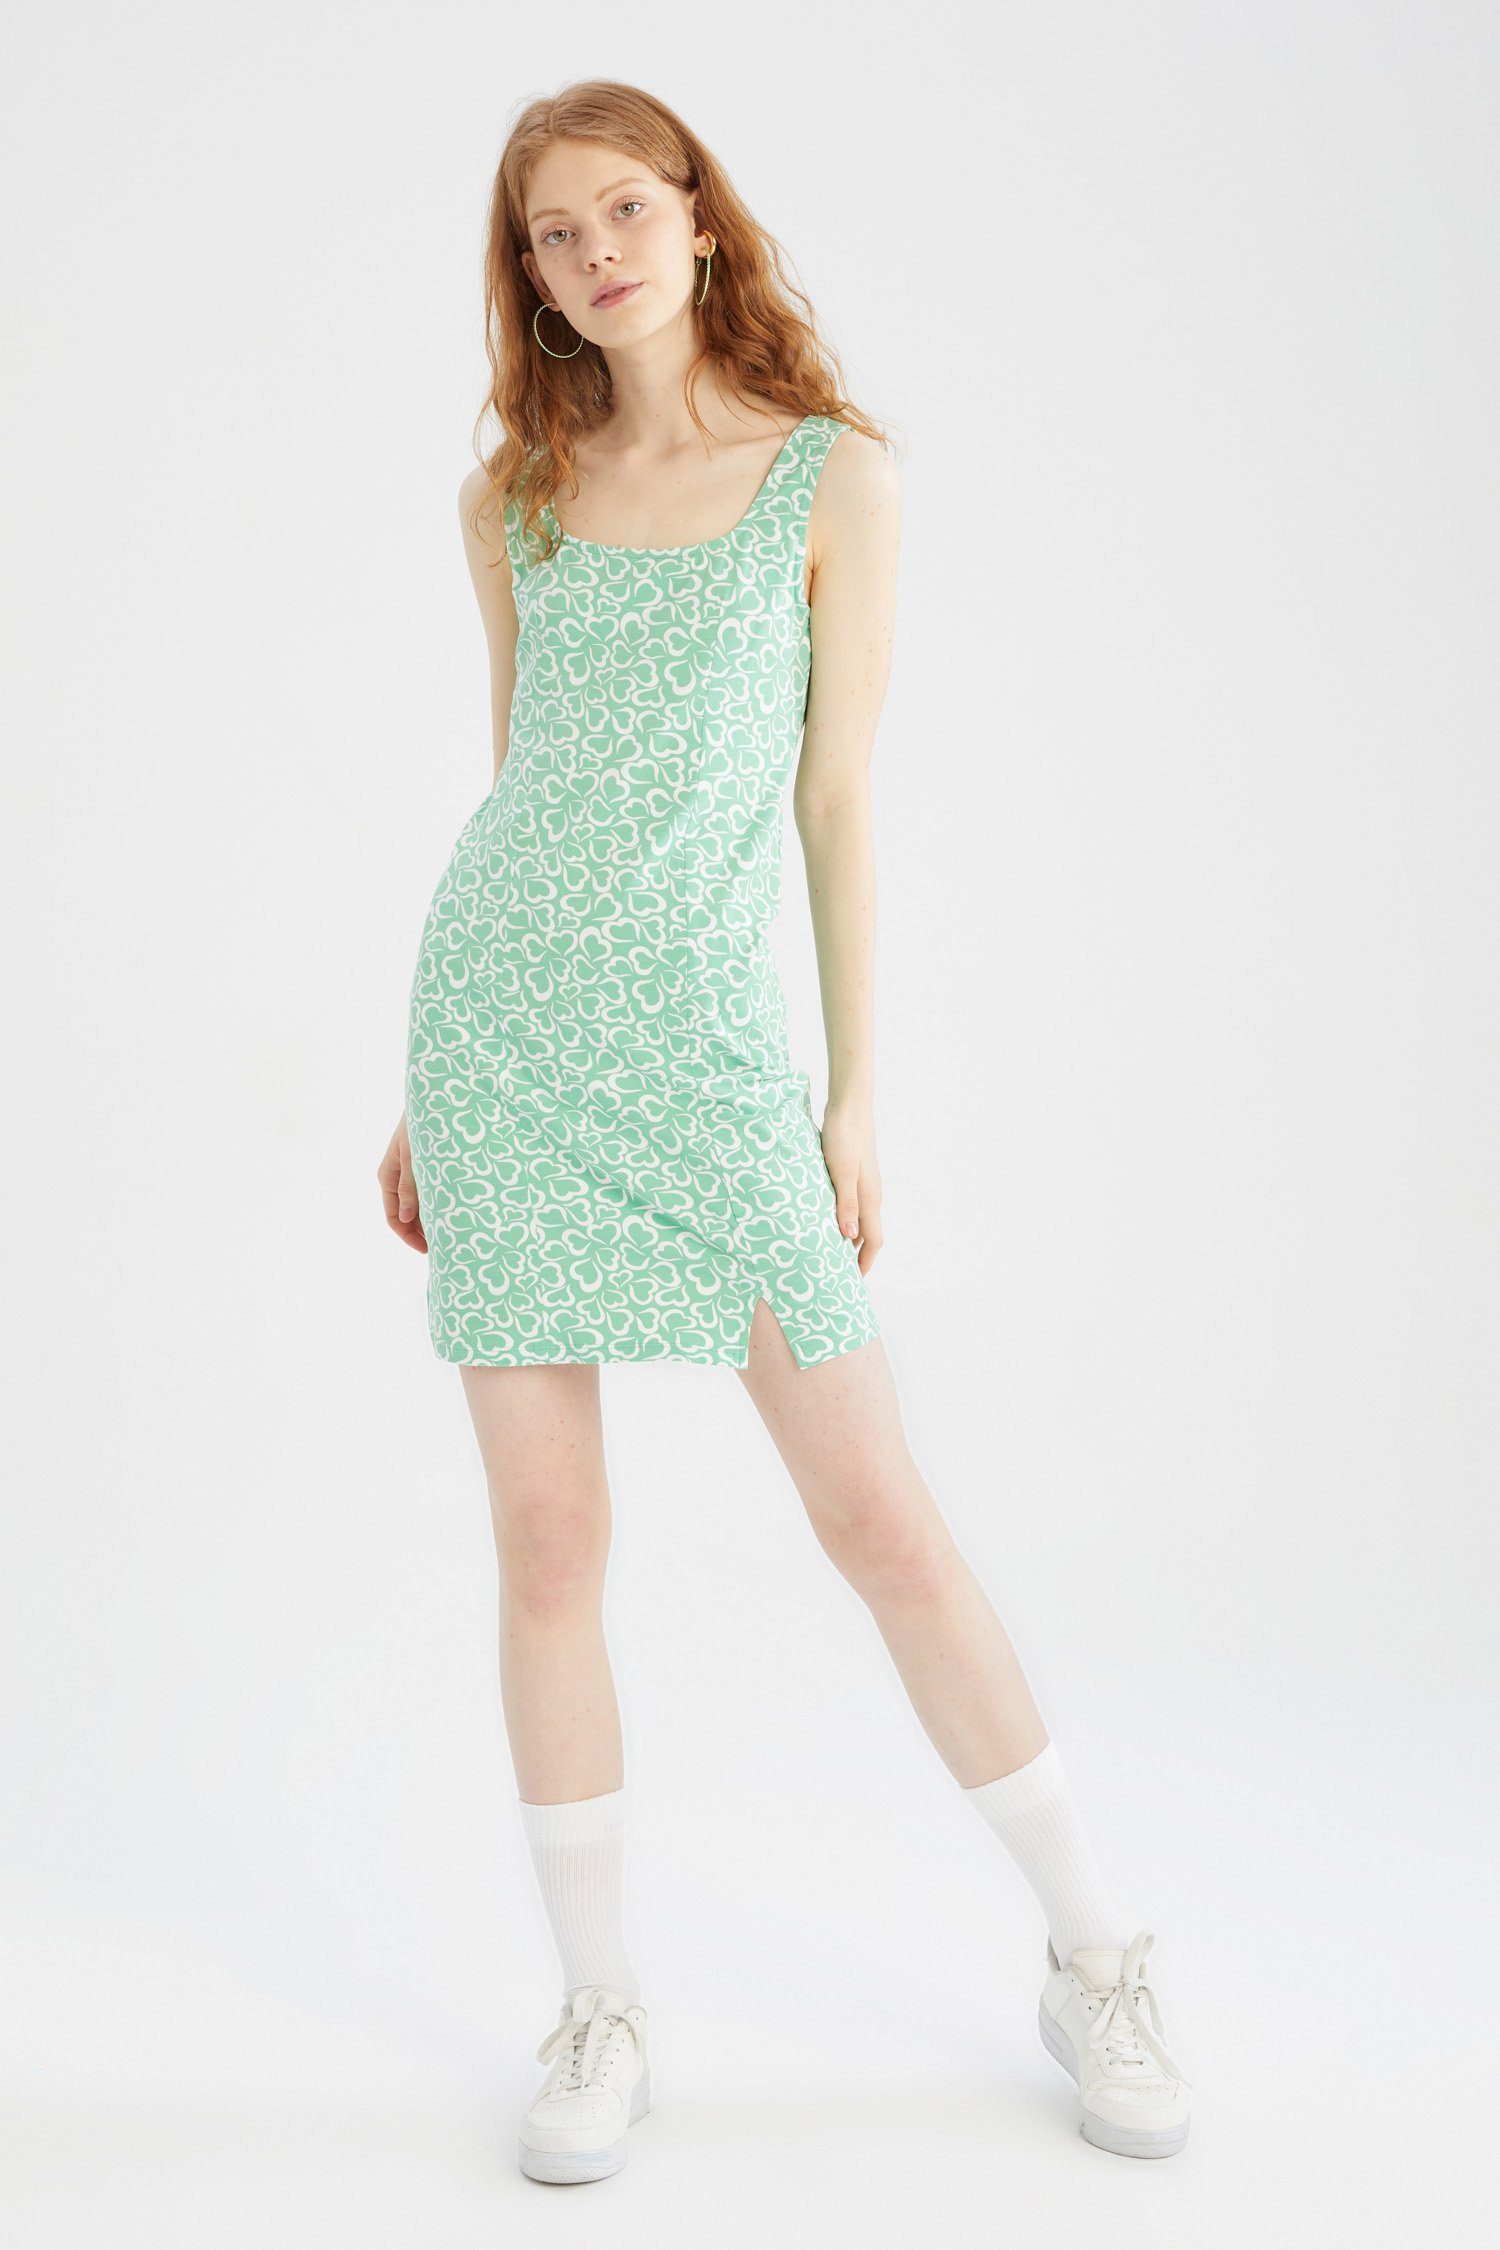 Damen DRESS DeFacto Mint Minikleid Sommerkleid BODYCON